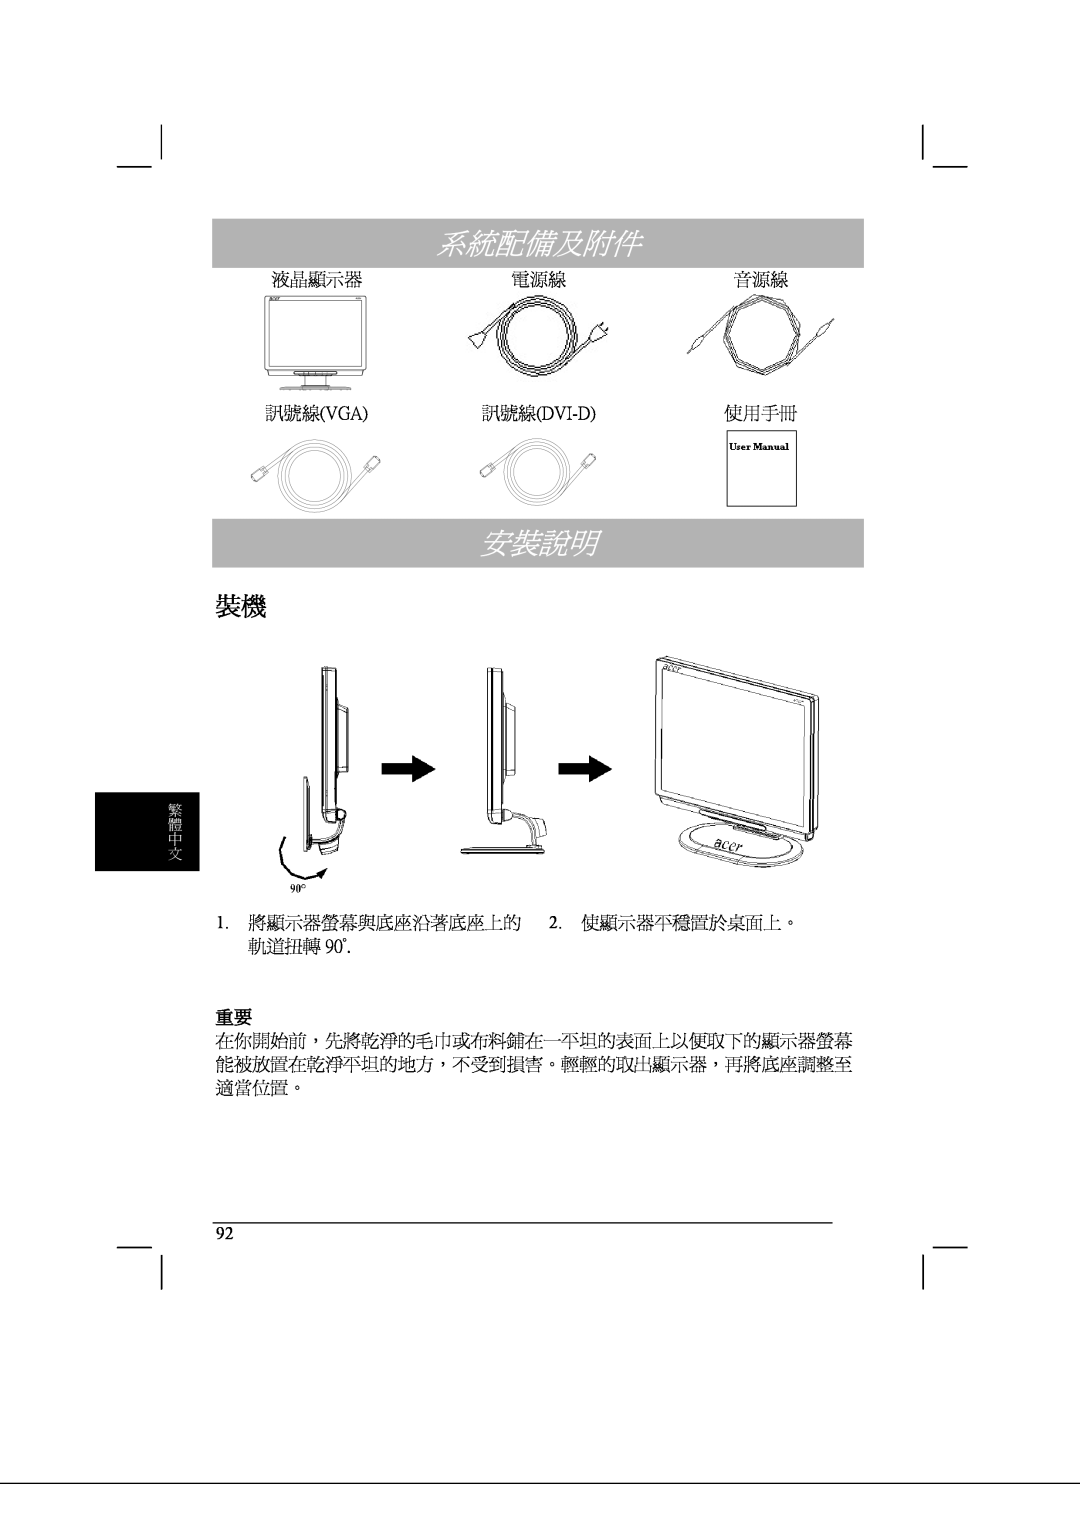 Acer AL2021 manual 系統配備及附件, 訊號線vga訊號線dvi-D使用手冊, 安裝說明, 繁 體 中 文 